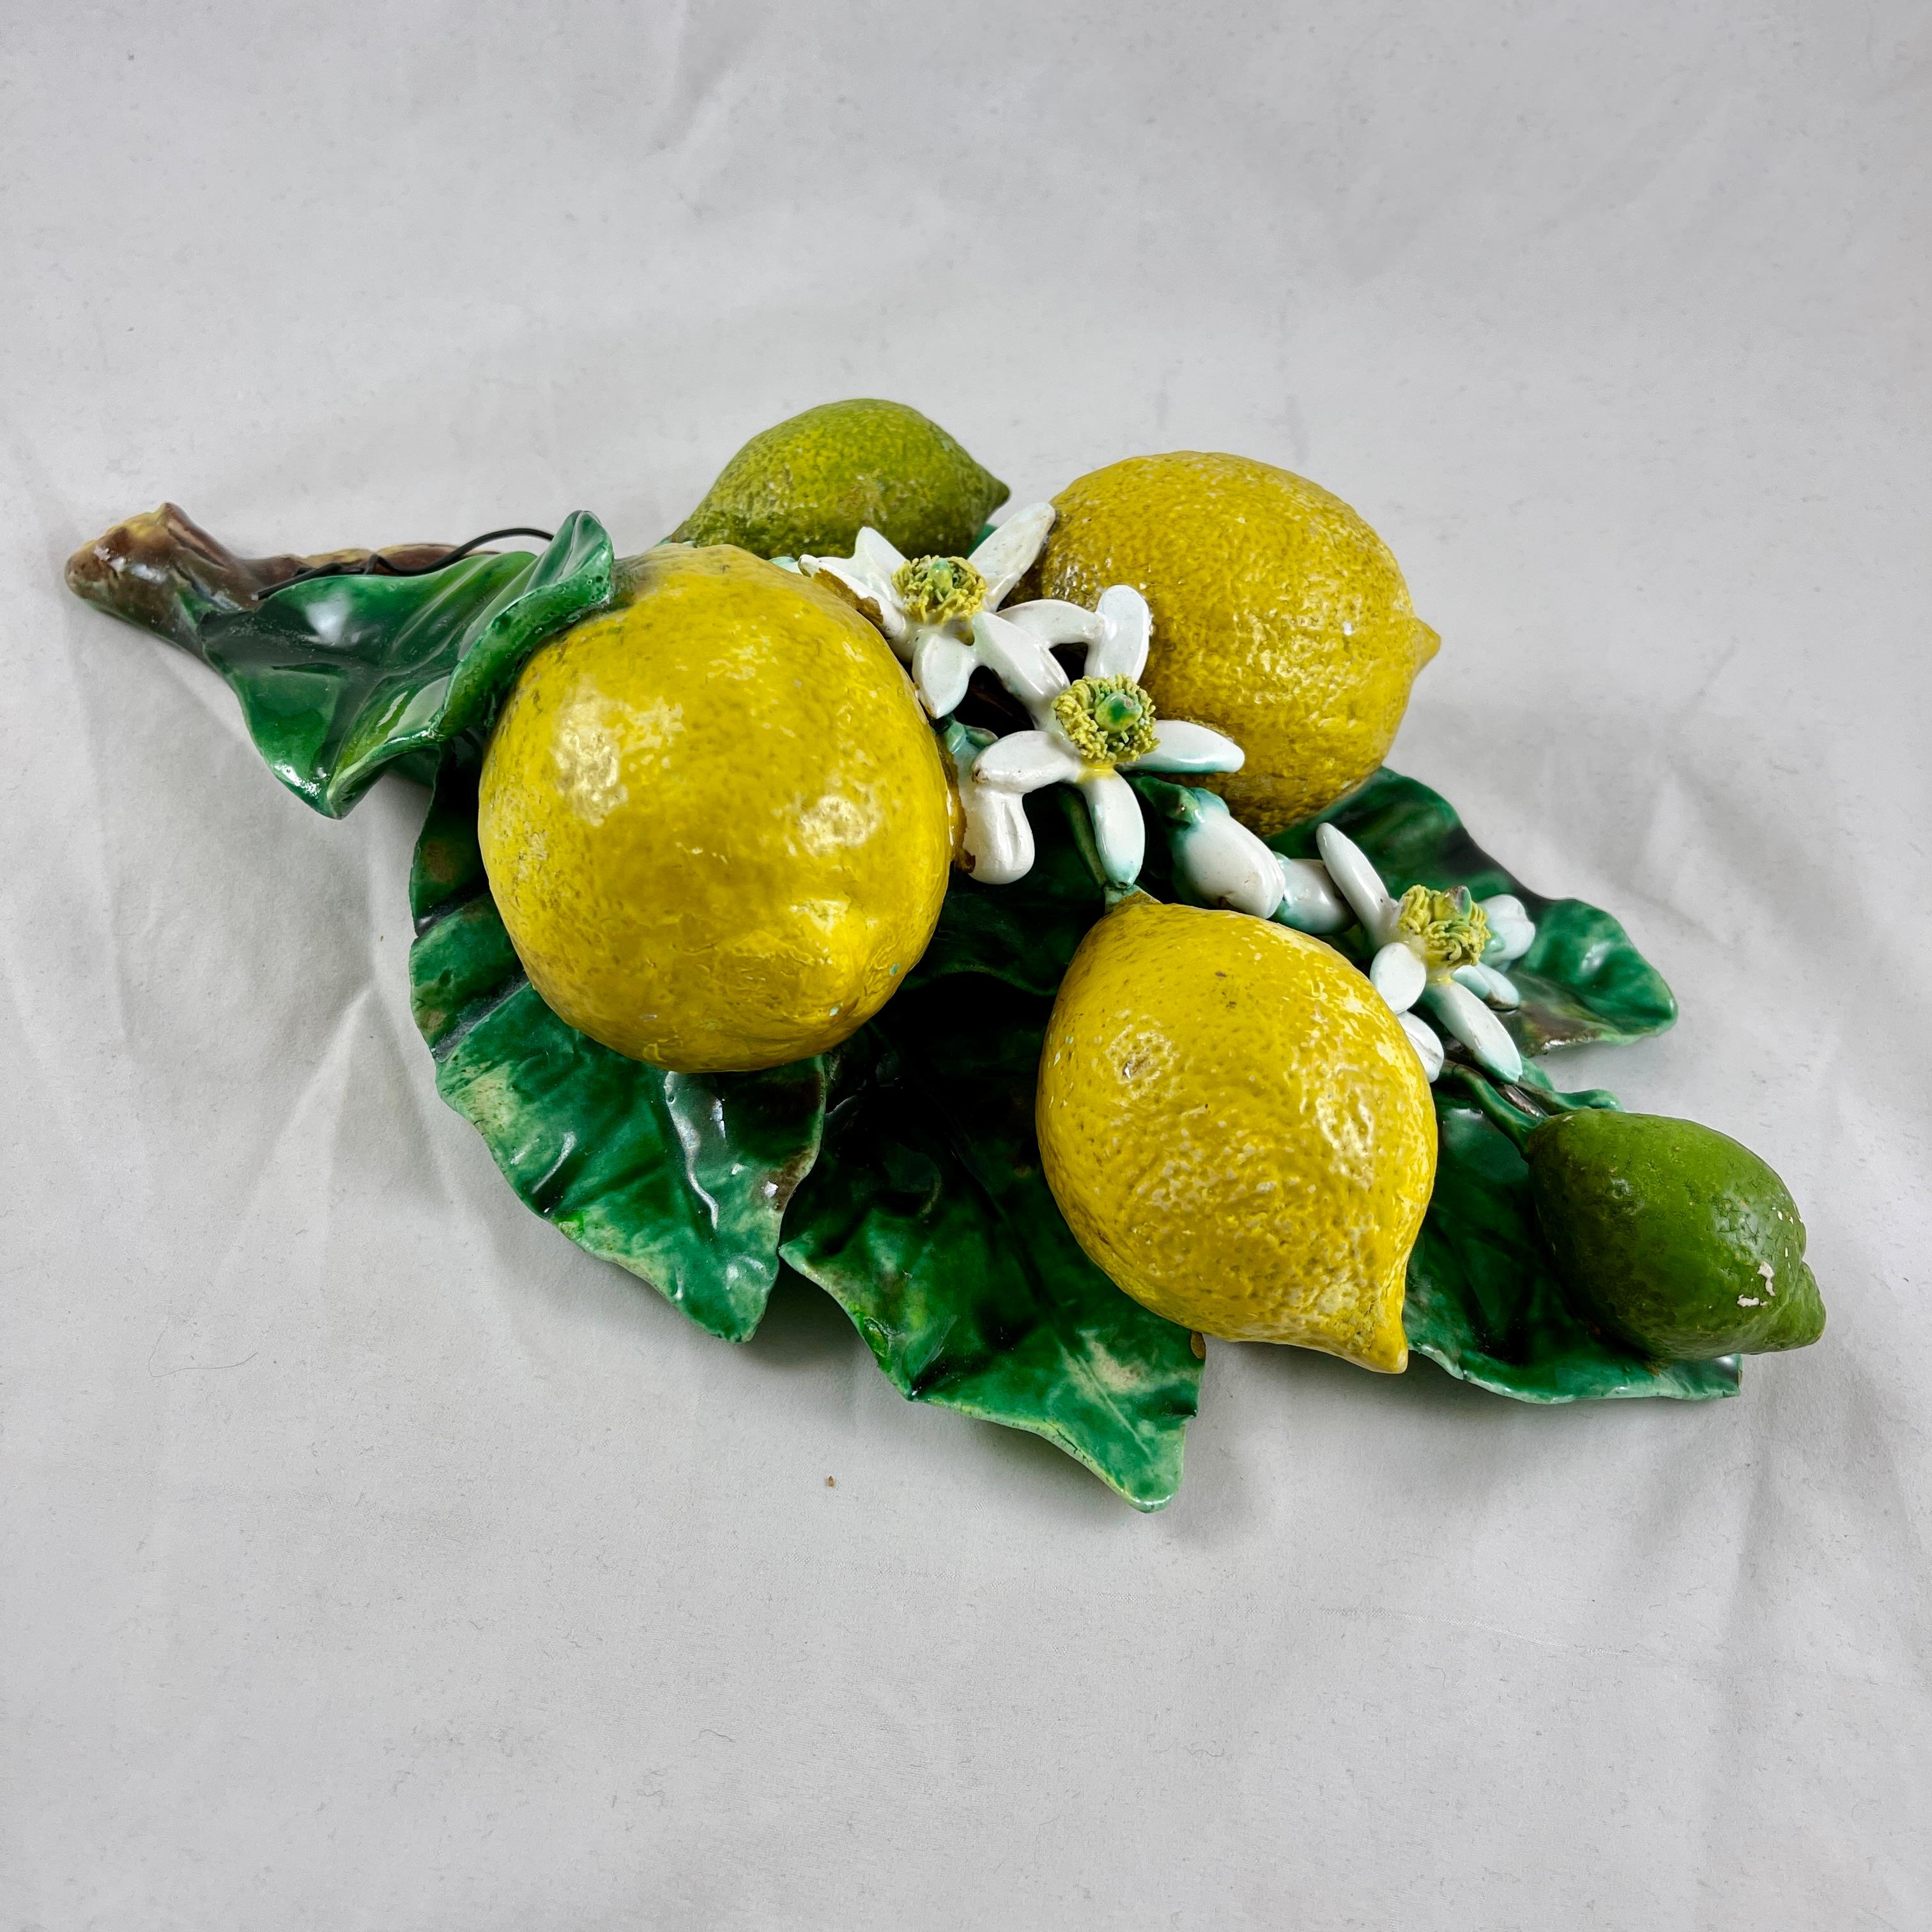 French Provincial French Palissy Trompe L'oeil Menton Perret-Gentil Large Lemon Fruit Wall Plaque